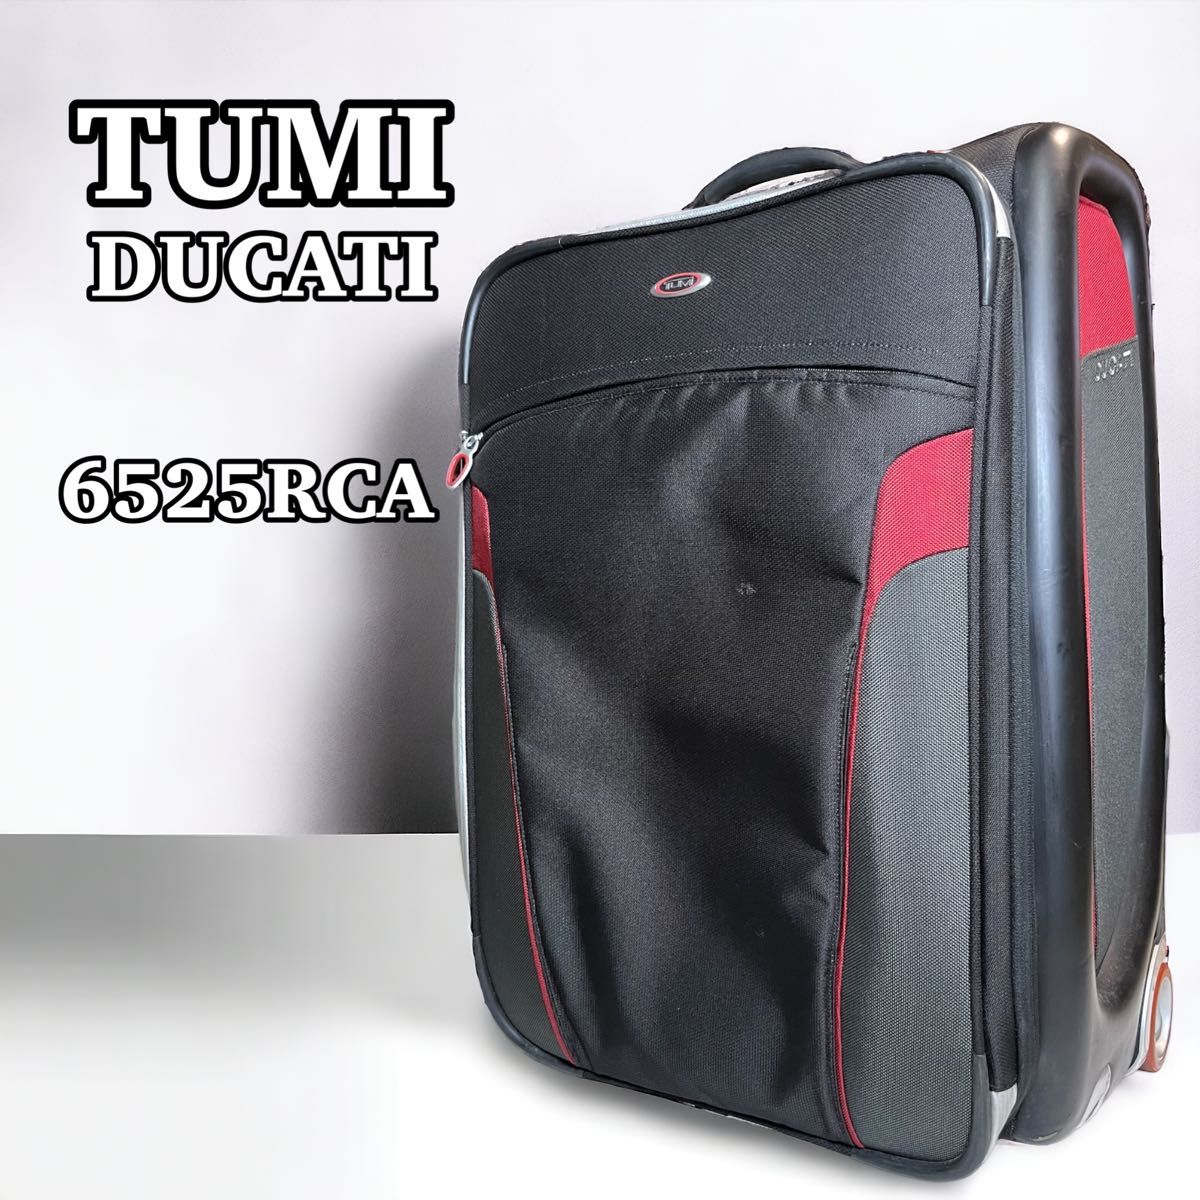 TUMI DUCATI キャリーバッグ キャリーケース トラベルバッグ トゥミ キャリーバッグ スーツケース 旅行